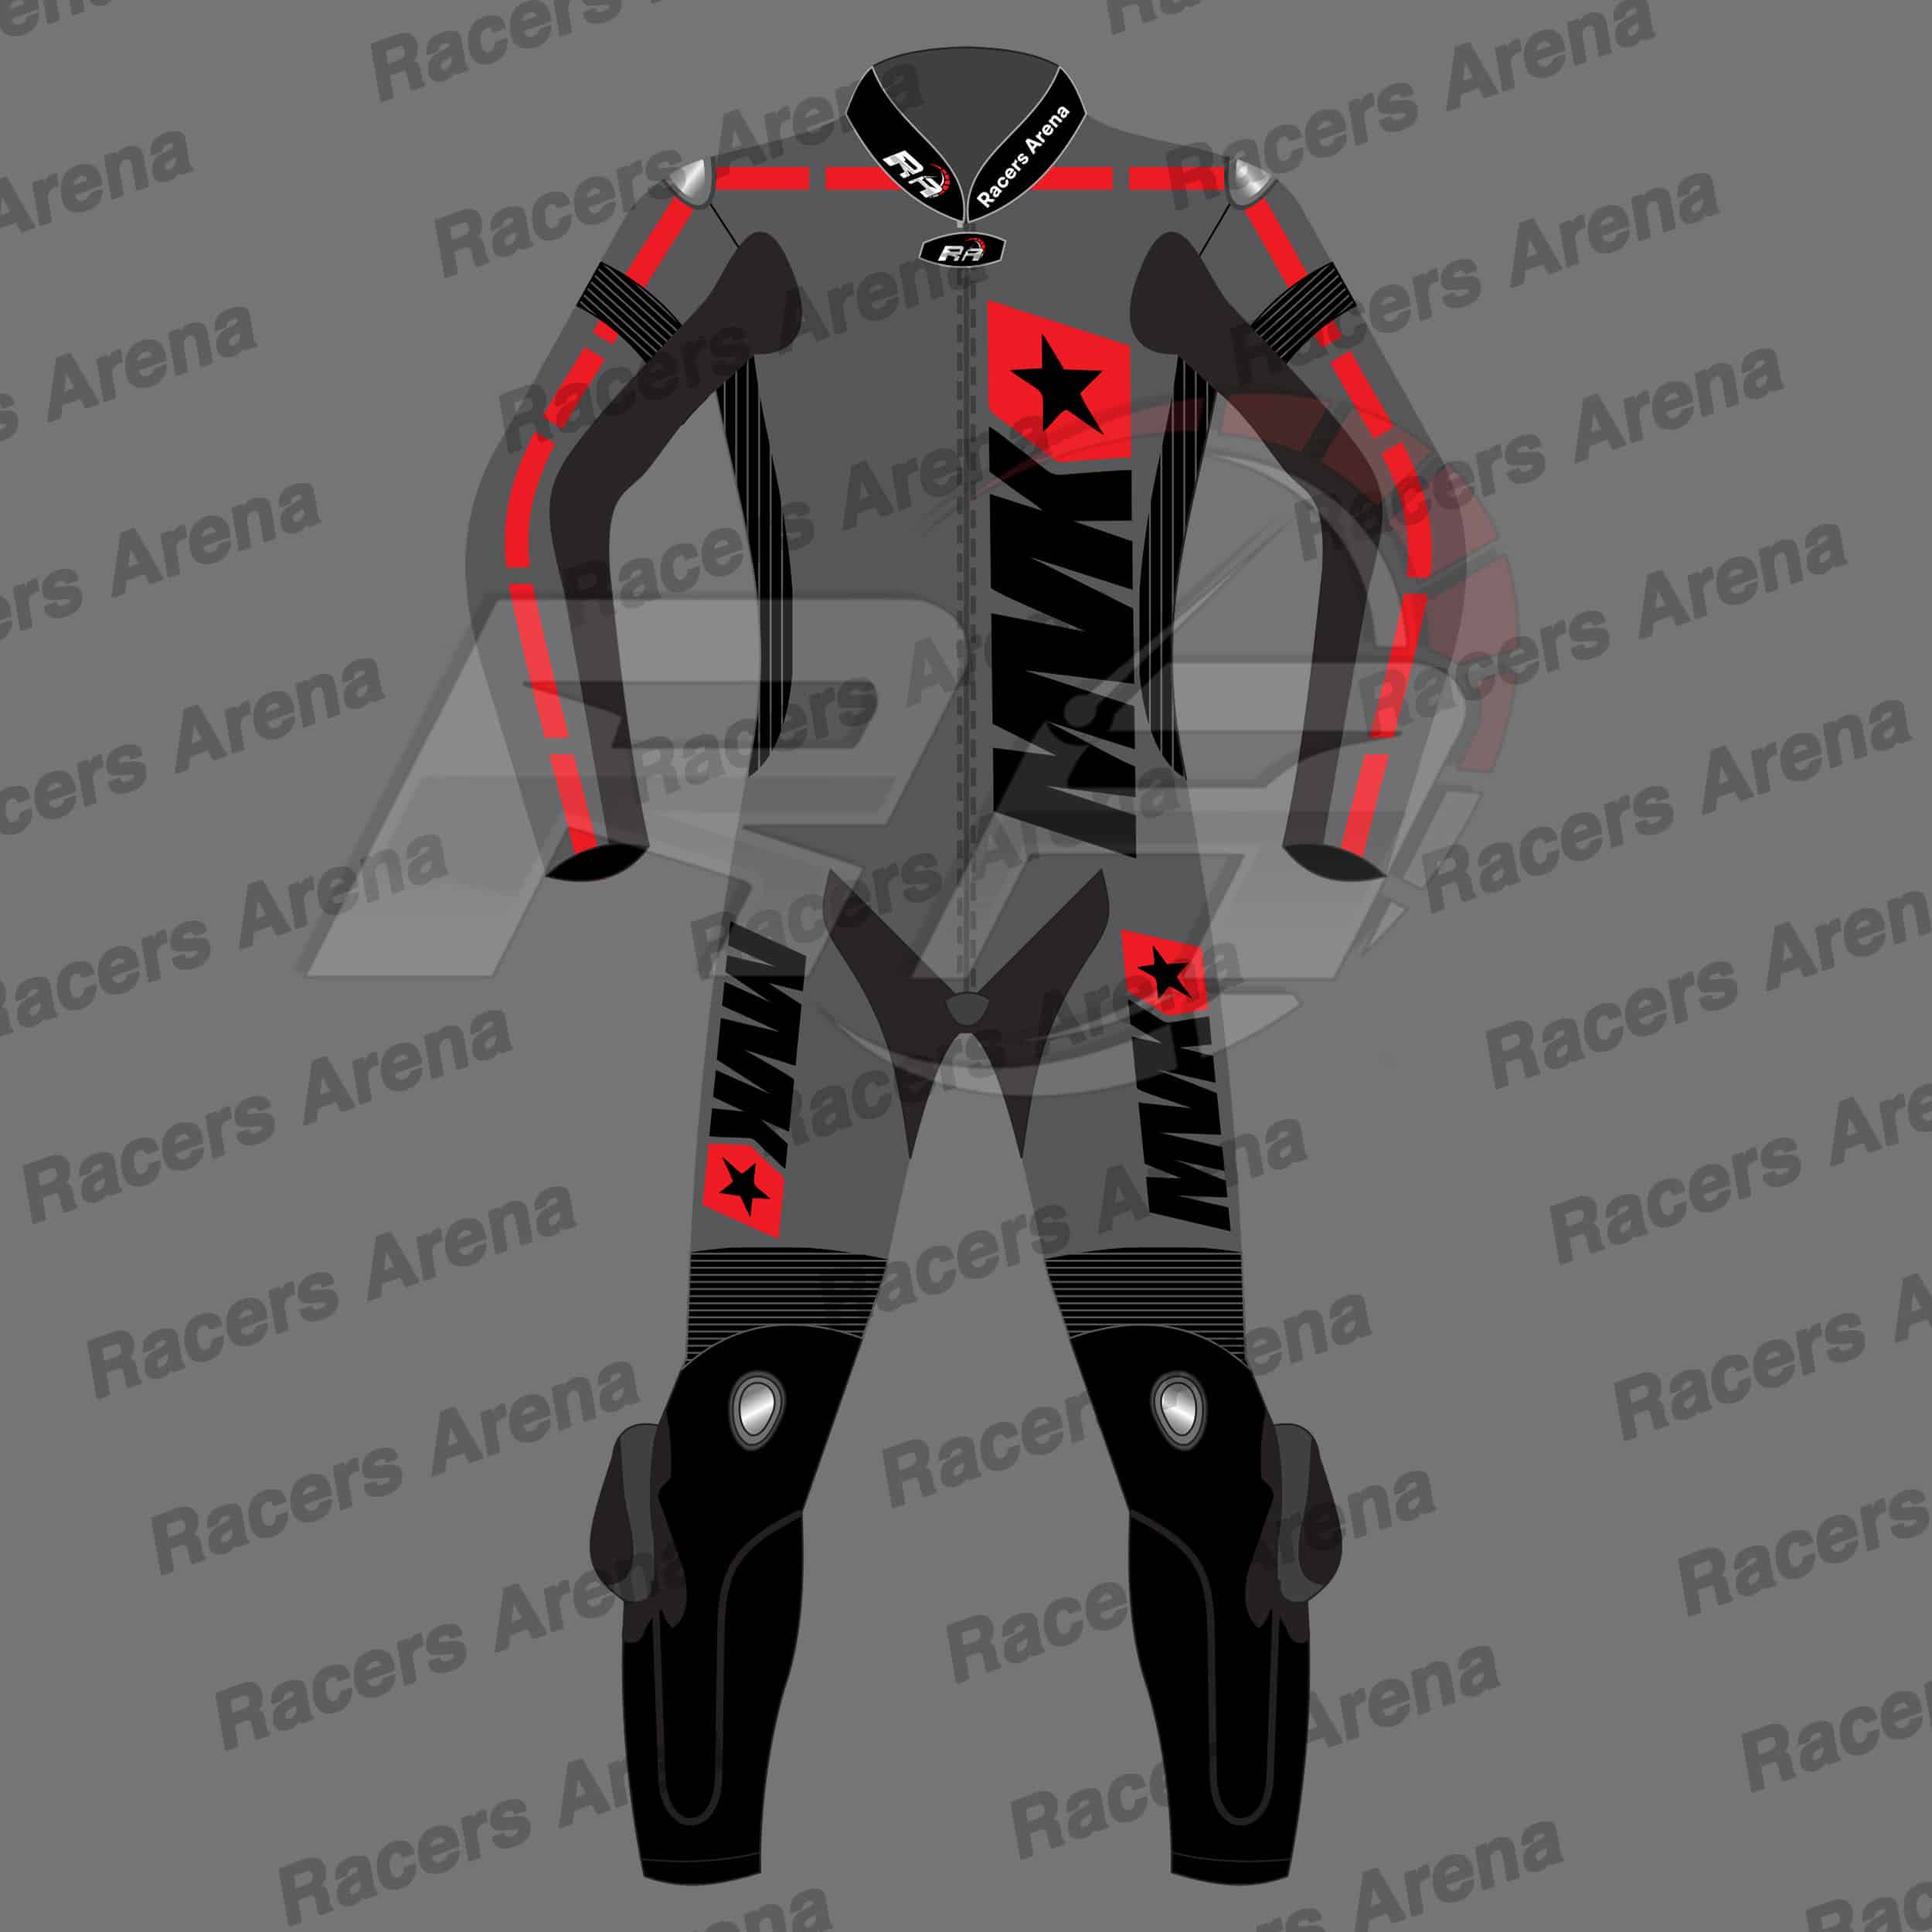 Maverick Vinales Winter Test 2023 Aprilia Race Suit - Racers Arena UK